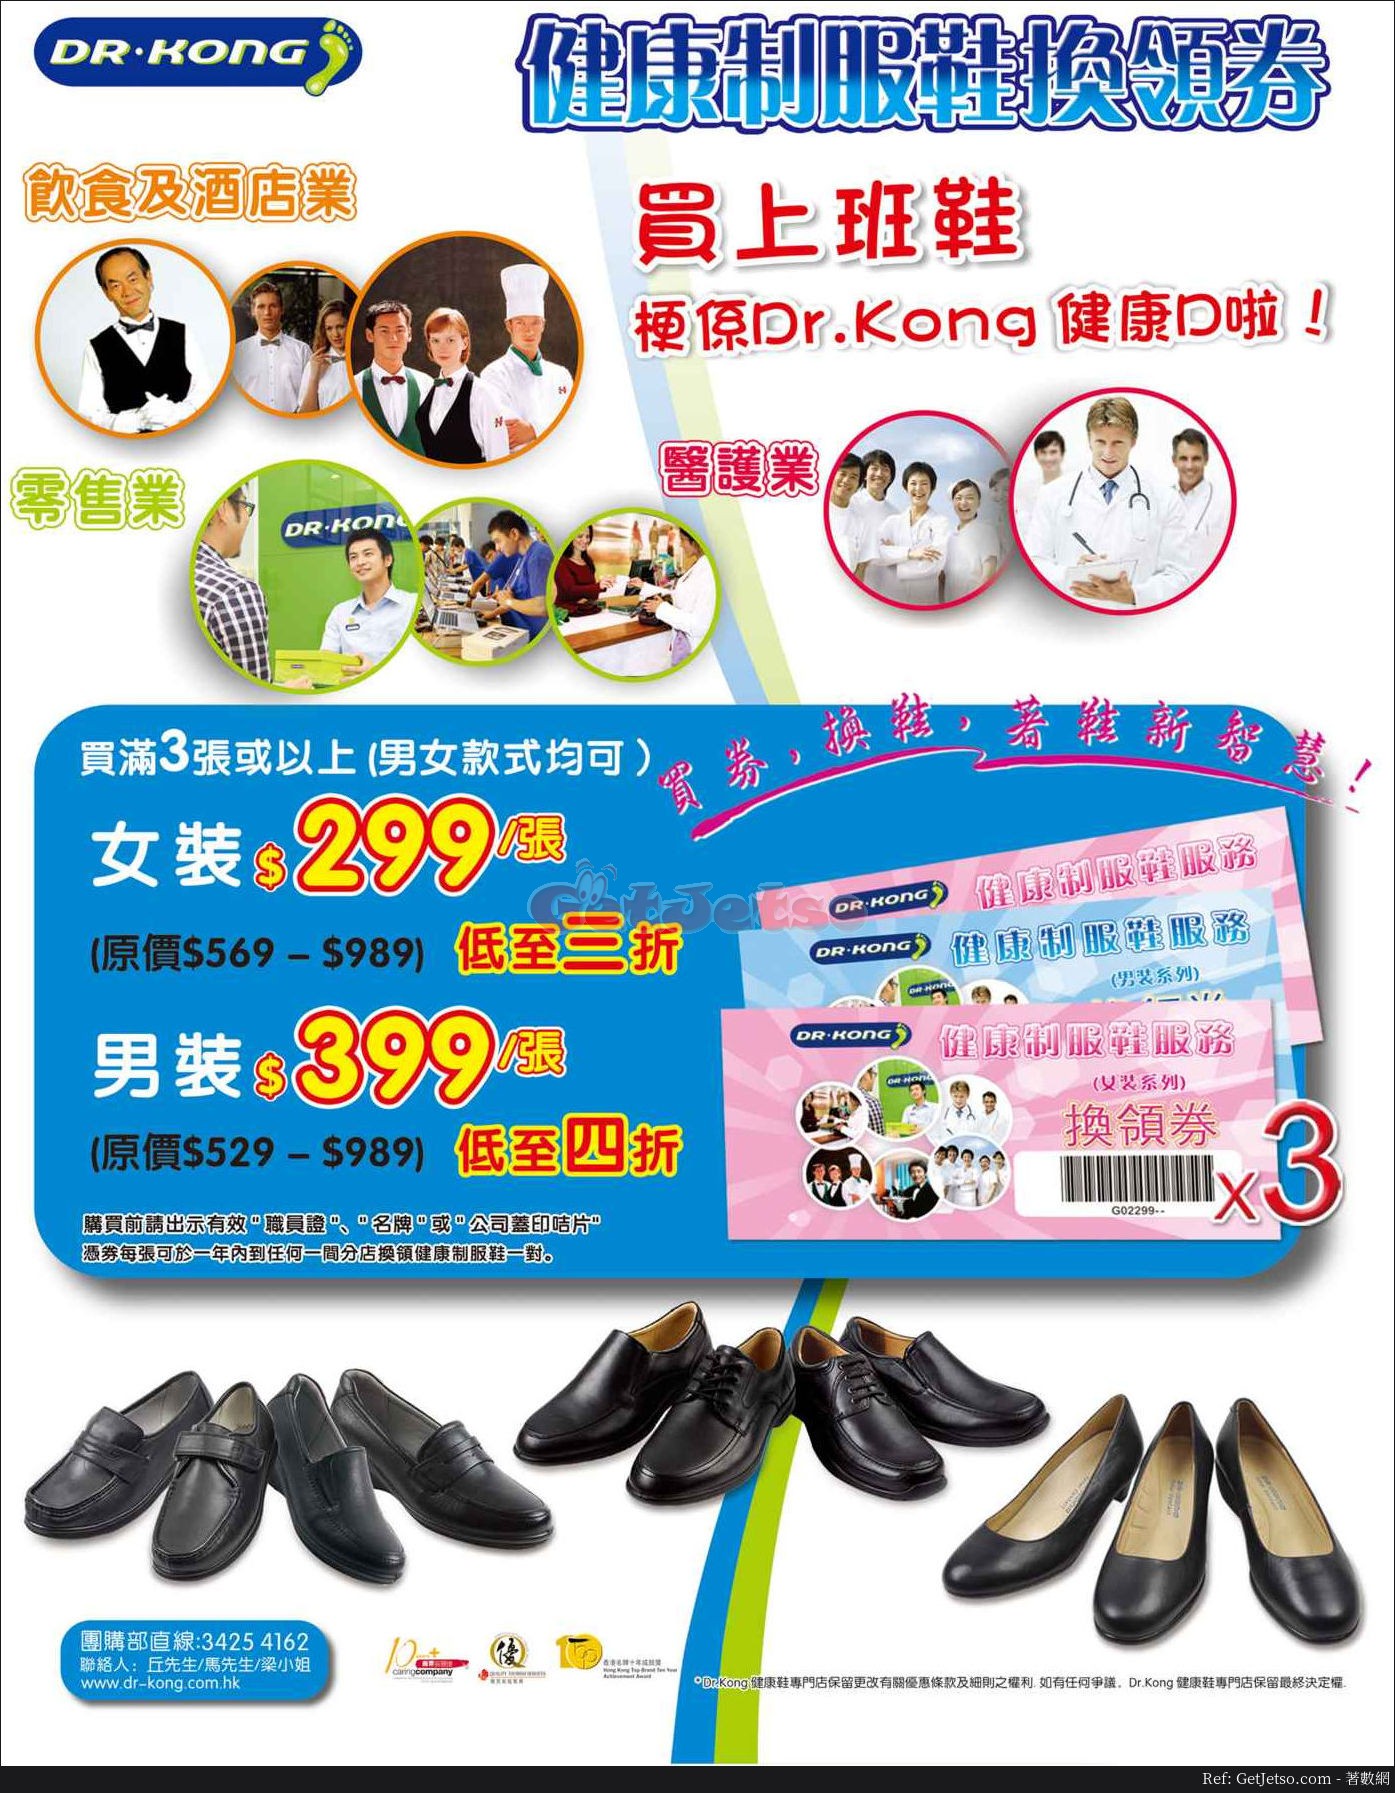 DR.KONG 低至3折健康制服鞋換領券優惠(18年2月8日起)圖片1